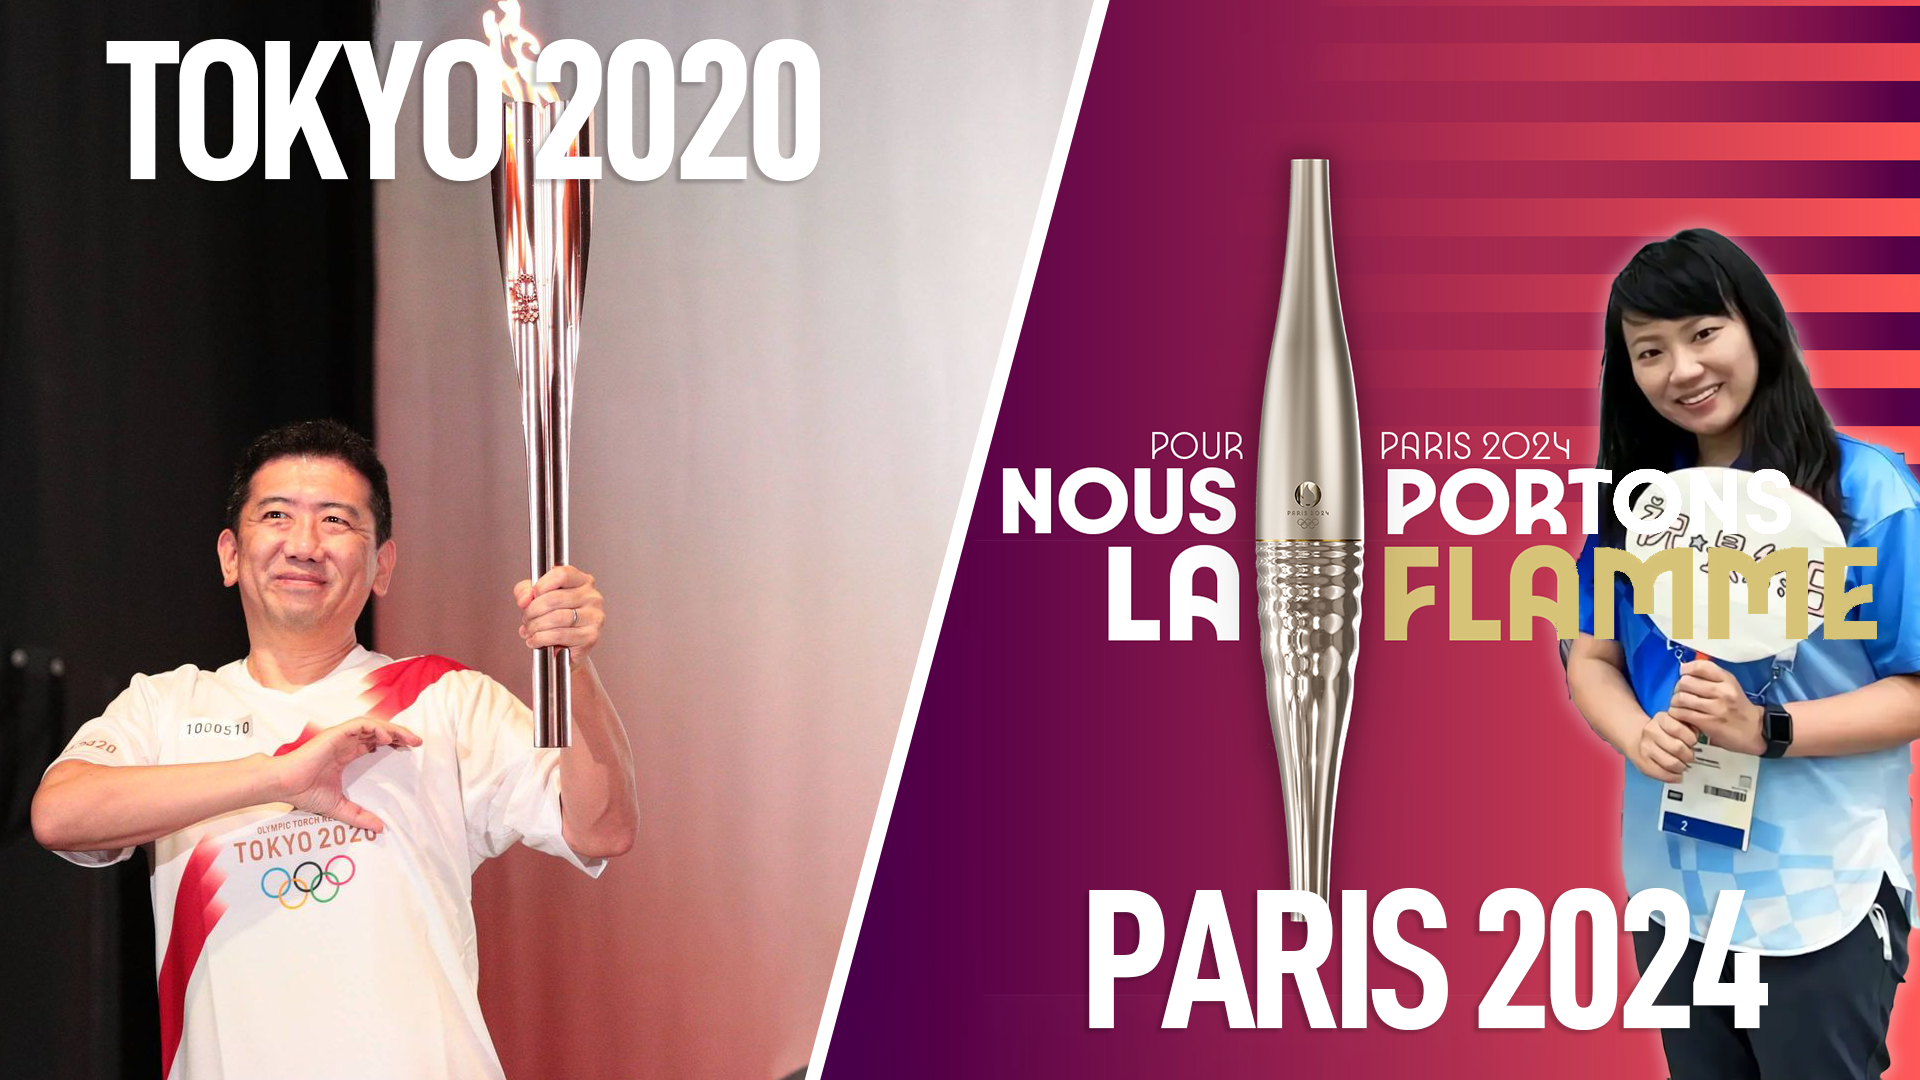 From TOKYO 2020 to PARIS 2024: Mai TARUMI Selected as PARIS 2024 Olympic Torchbearer